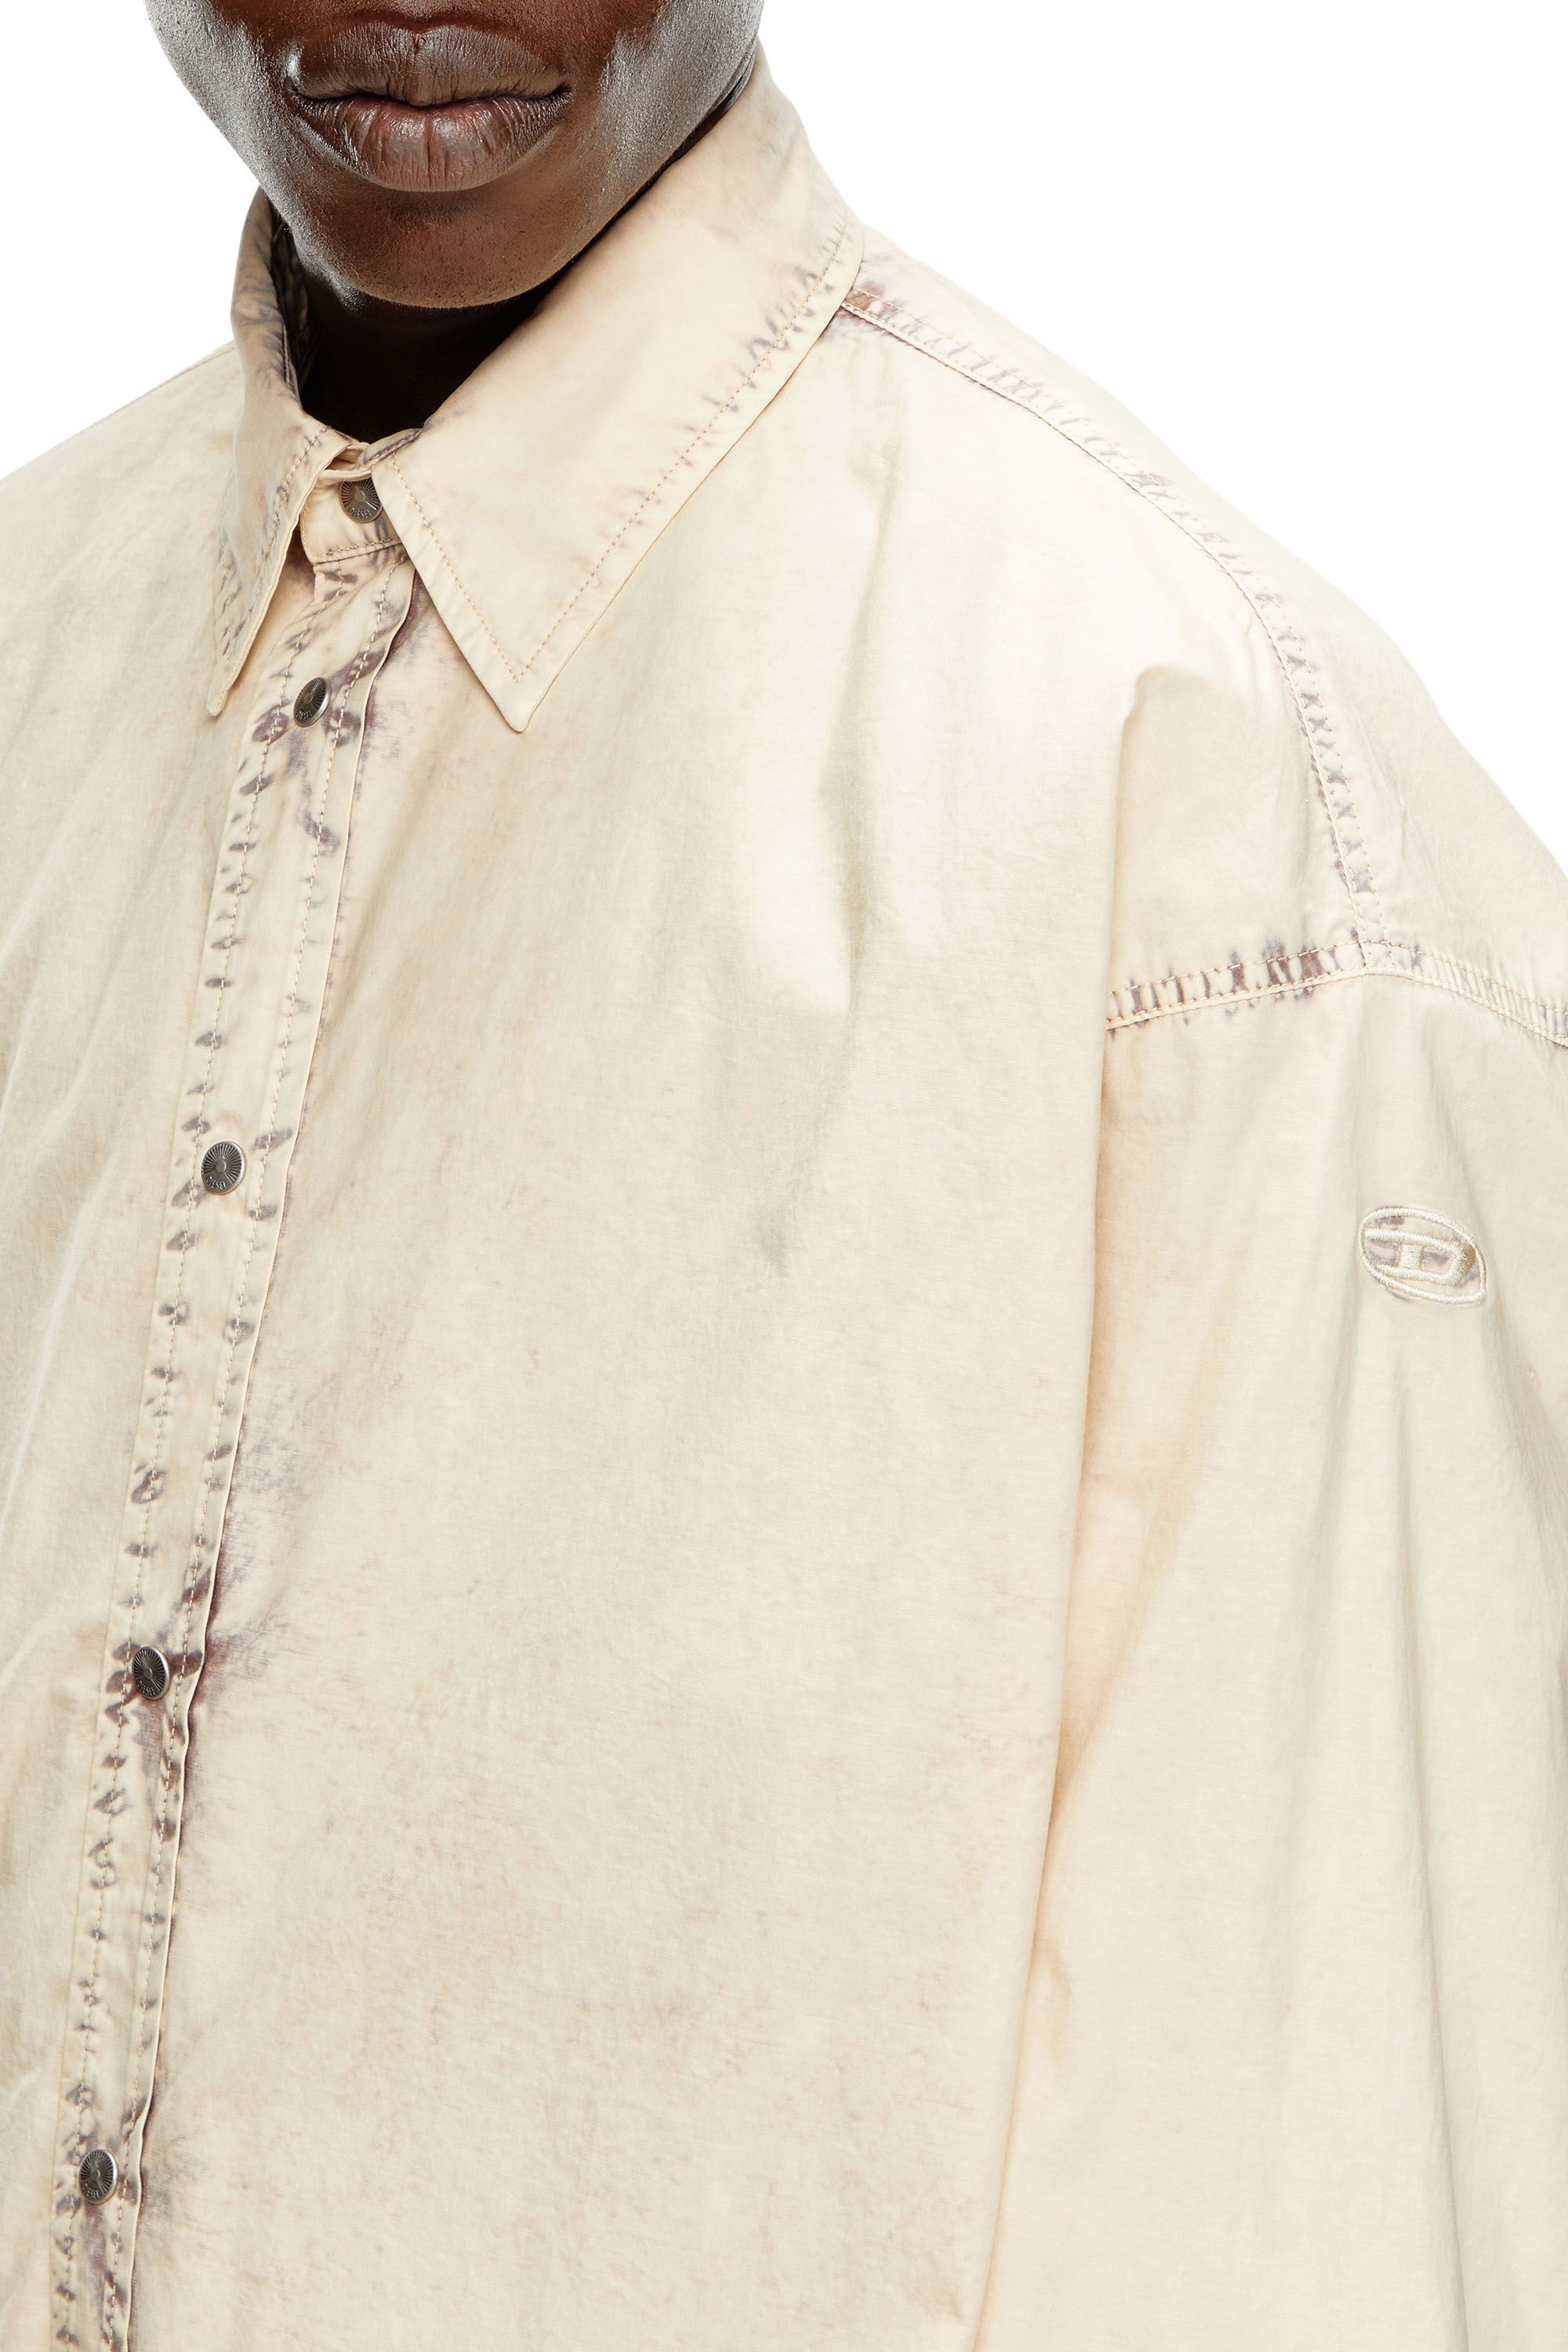 Diesel - S-VEKEN, Male Shirt in marbled cotton in ベージュ - Image 5